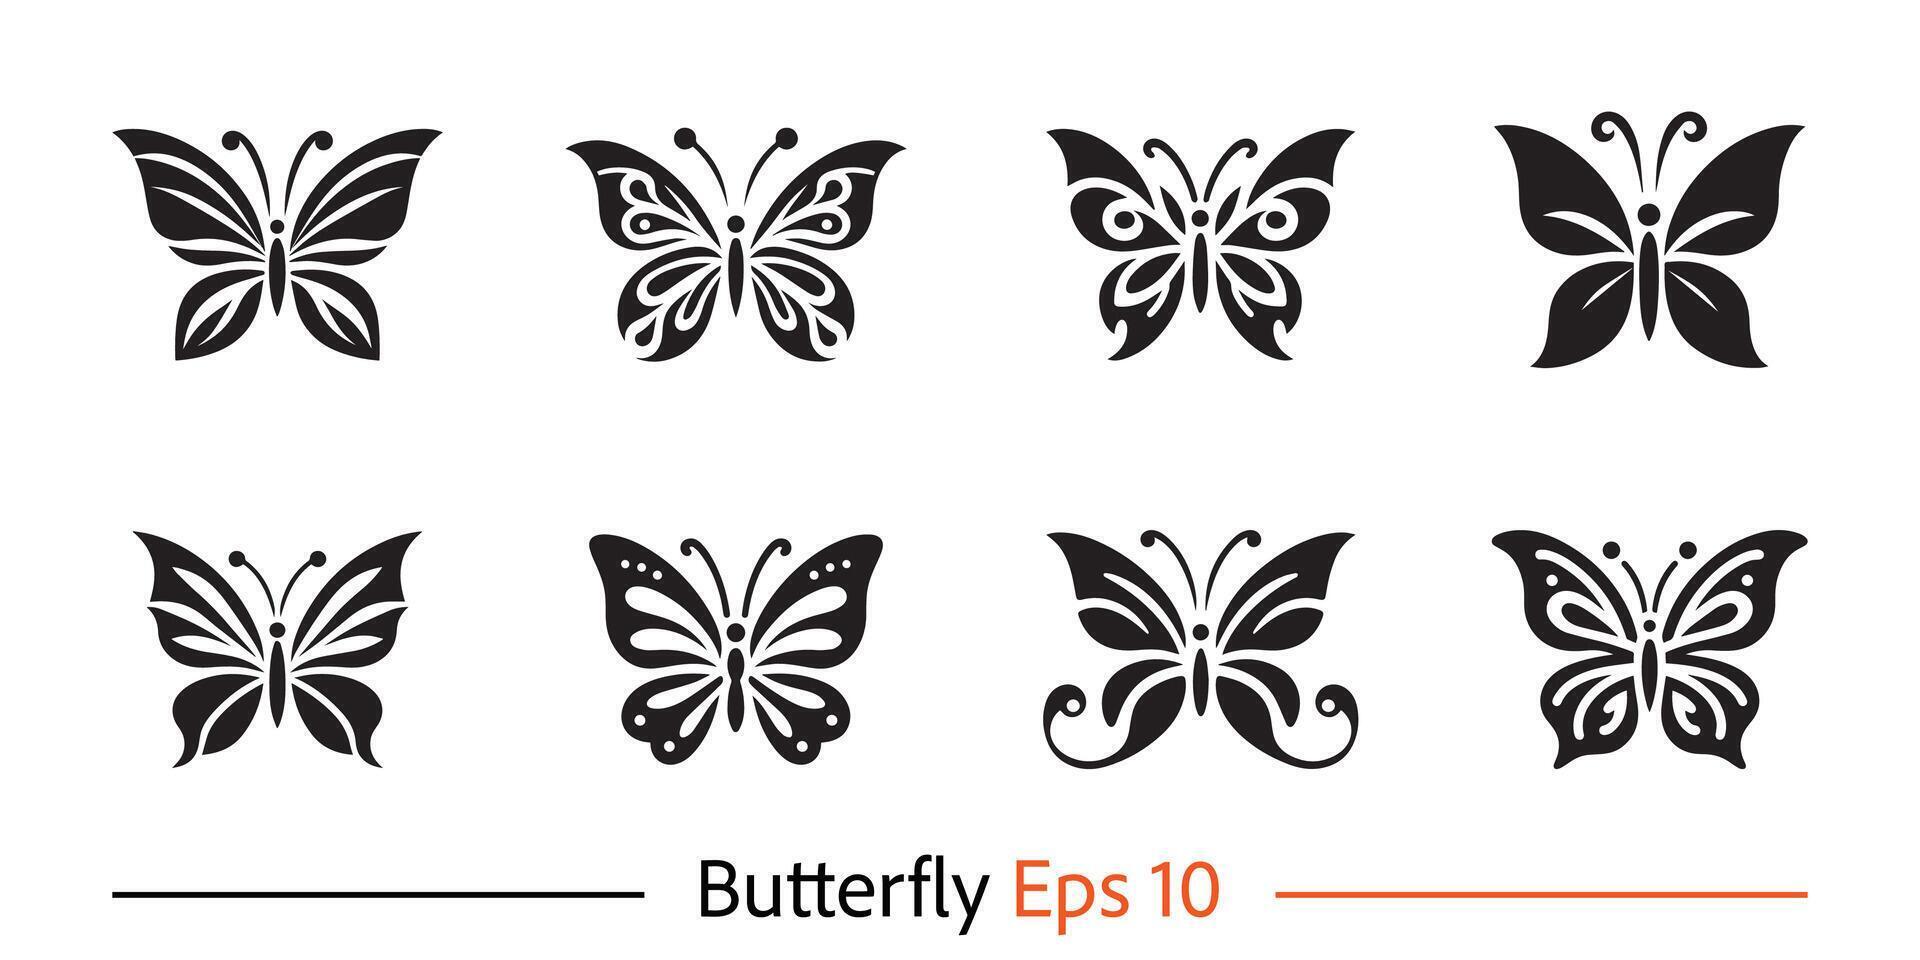 vlinder logo vector reeks sjabloon, vlinder logo vector reeks elementen, vlinder logo vector reeks illustratie